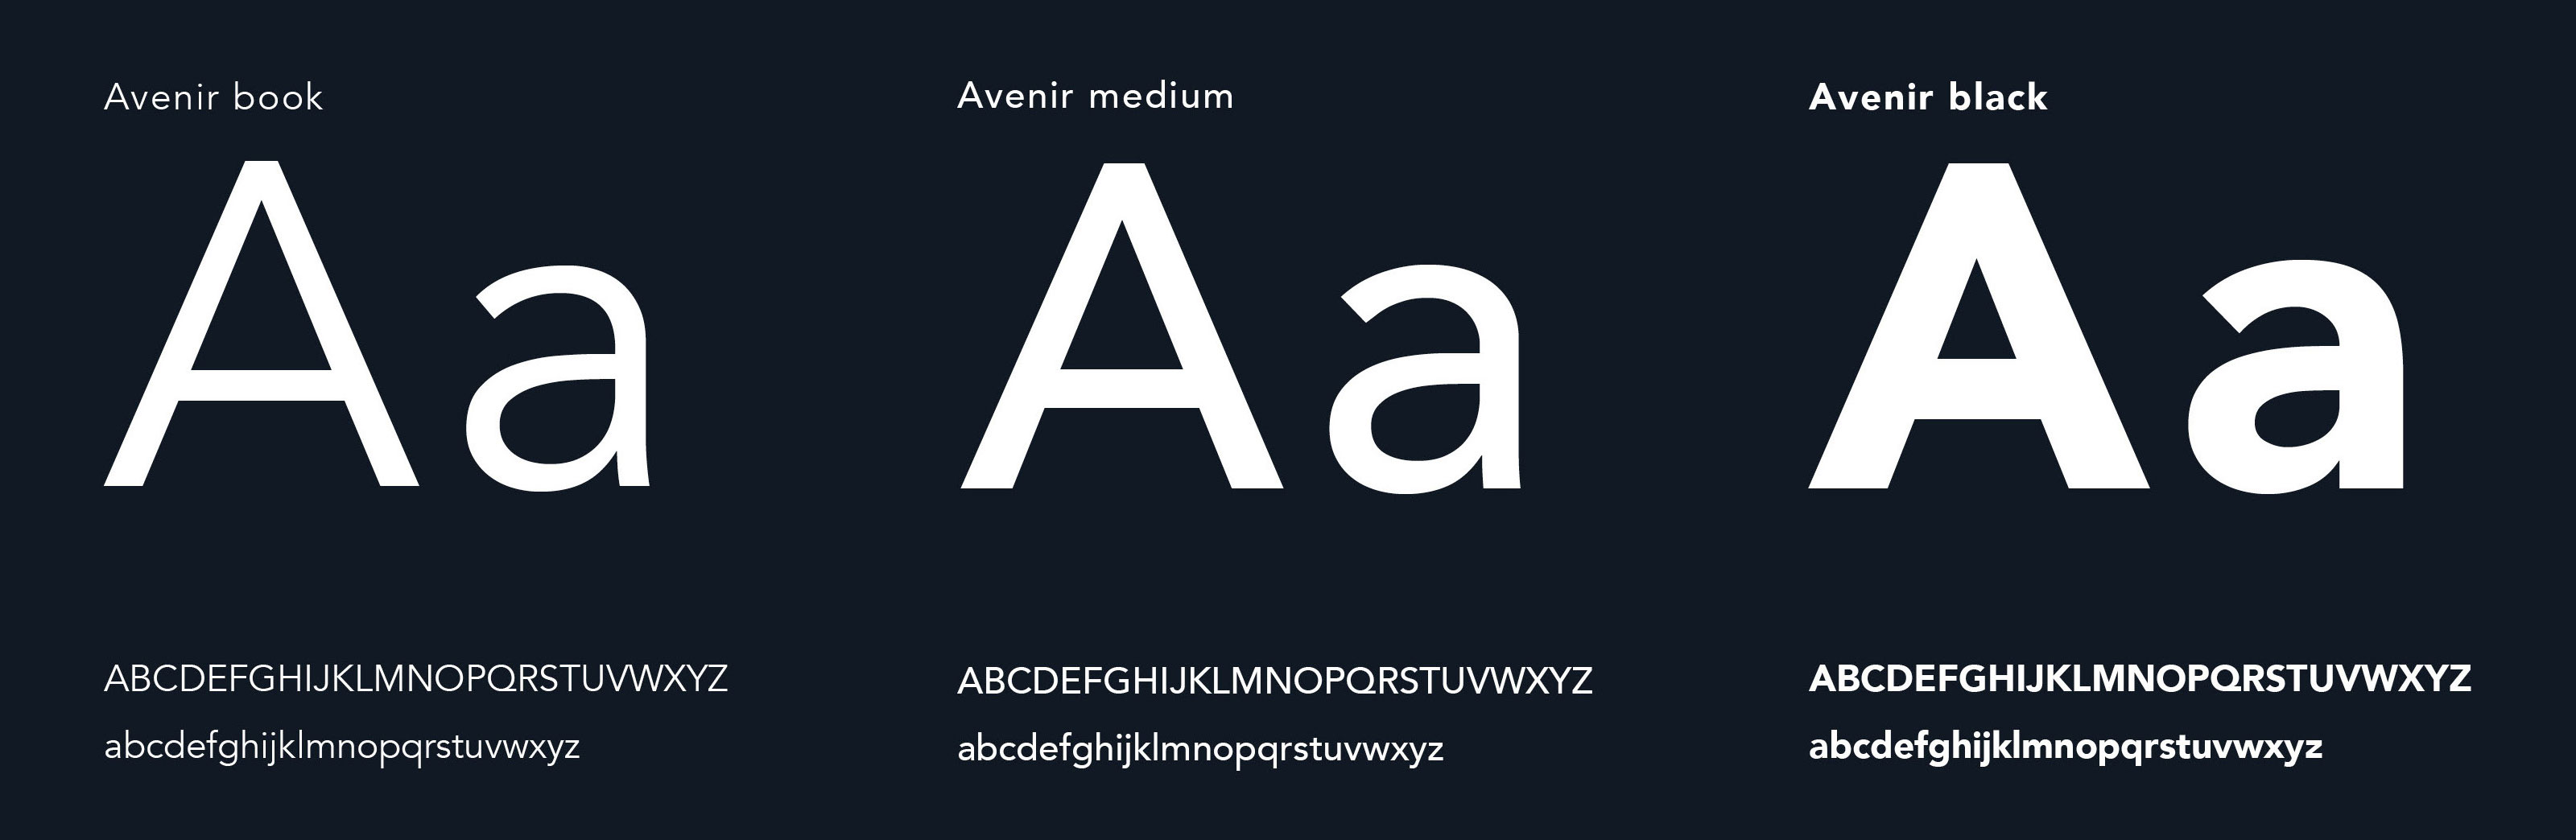 Typography-Avenir font family